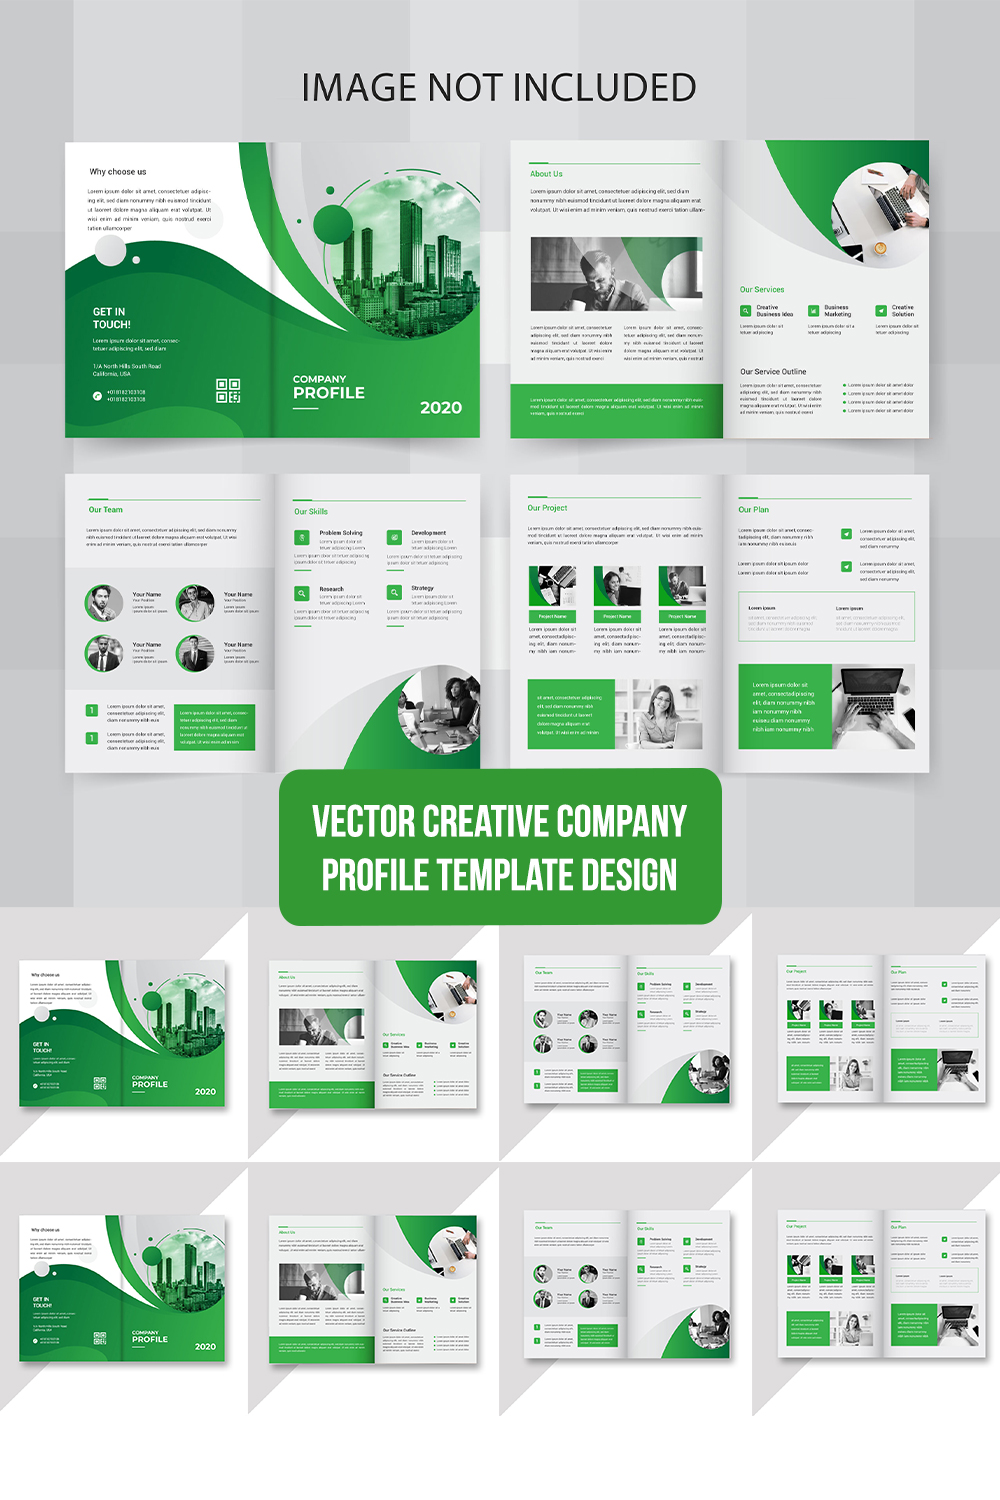 Vector creative company profile template design pinterest preview image.